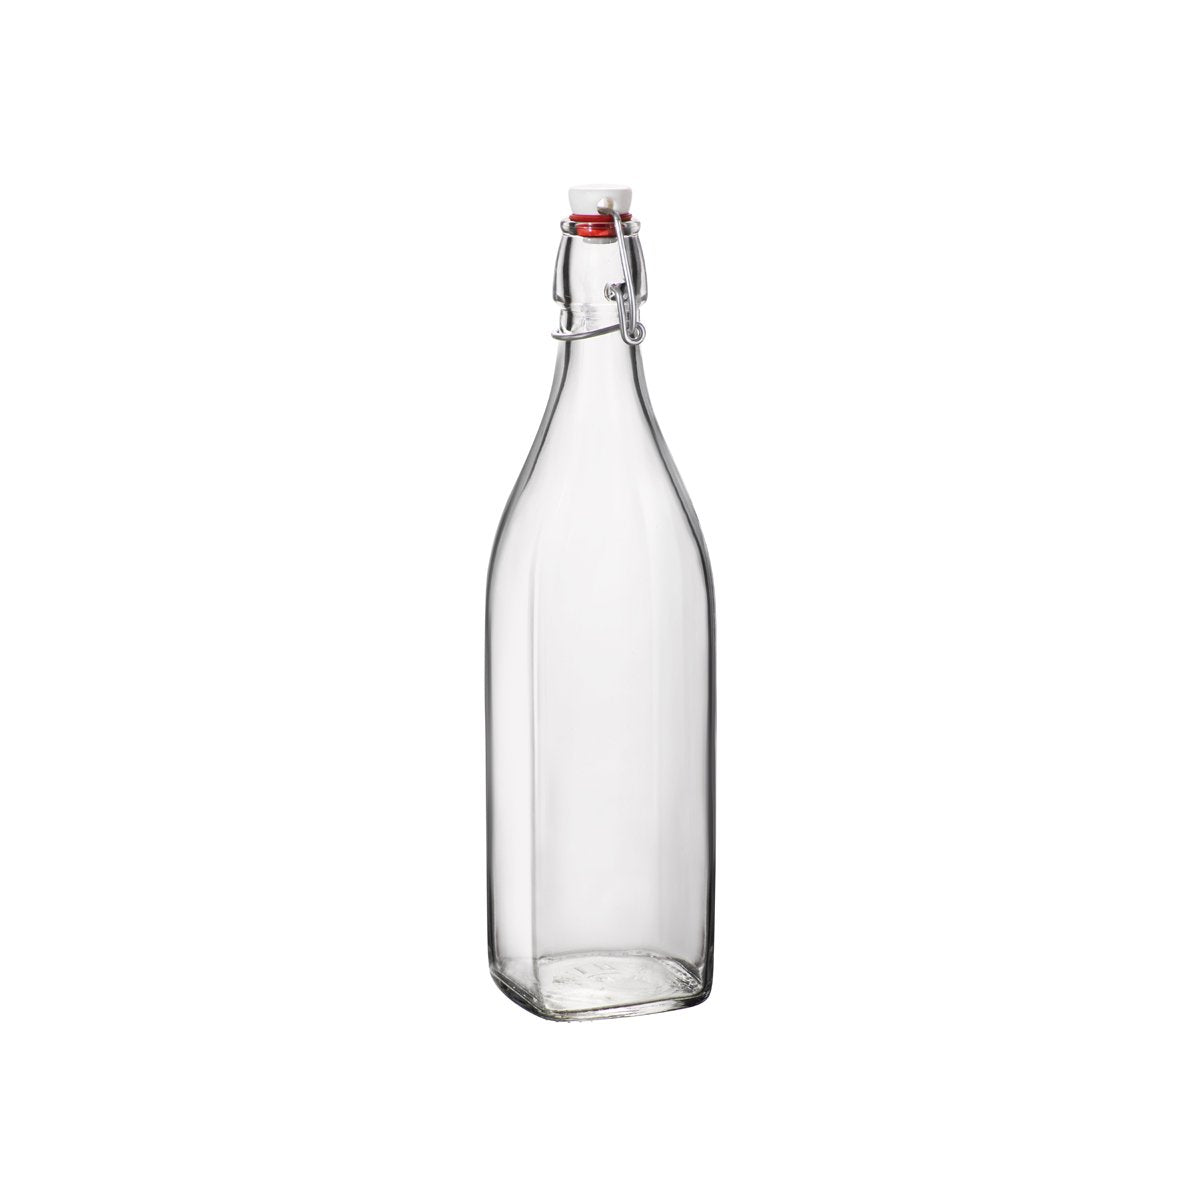 330-100 Bormioli Rocco Swing Bottle 1055ml With Swing Top Tomkin Australia Hospitality Supplies